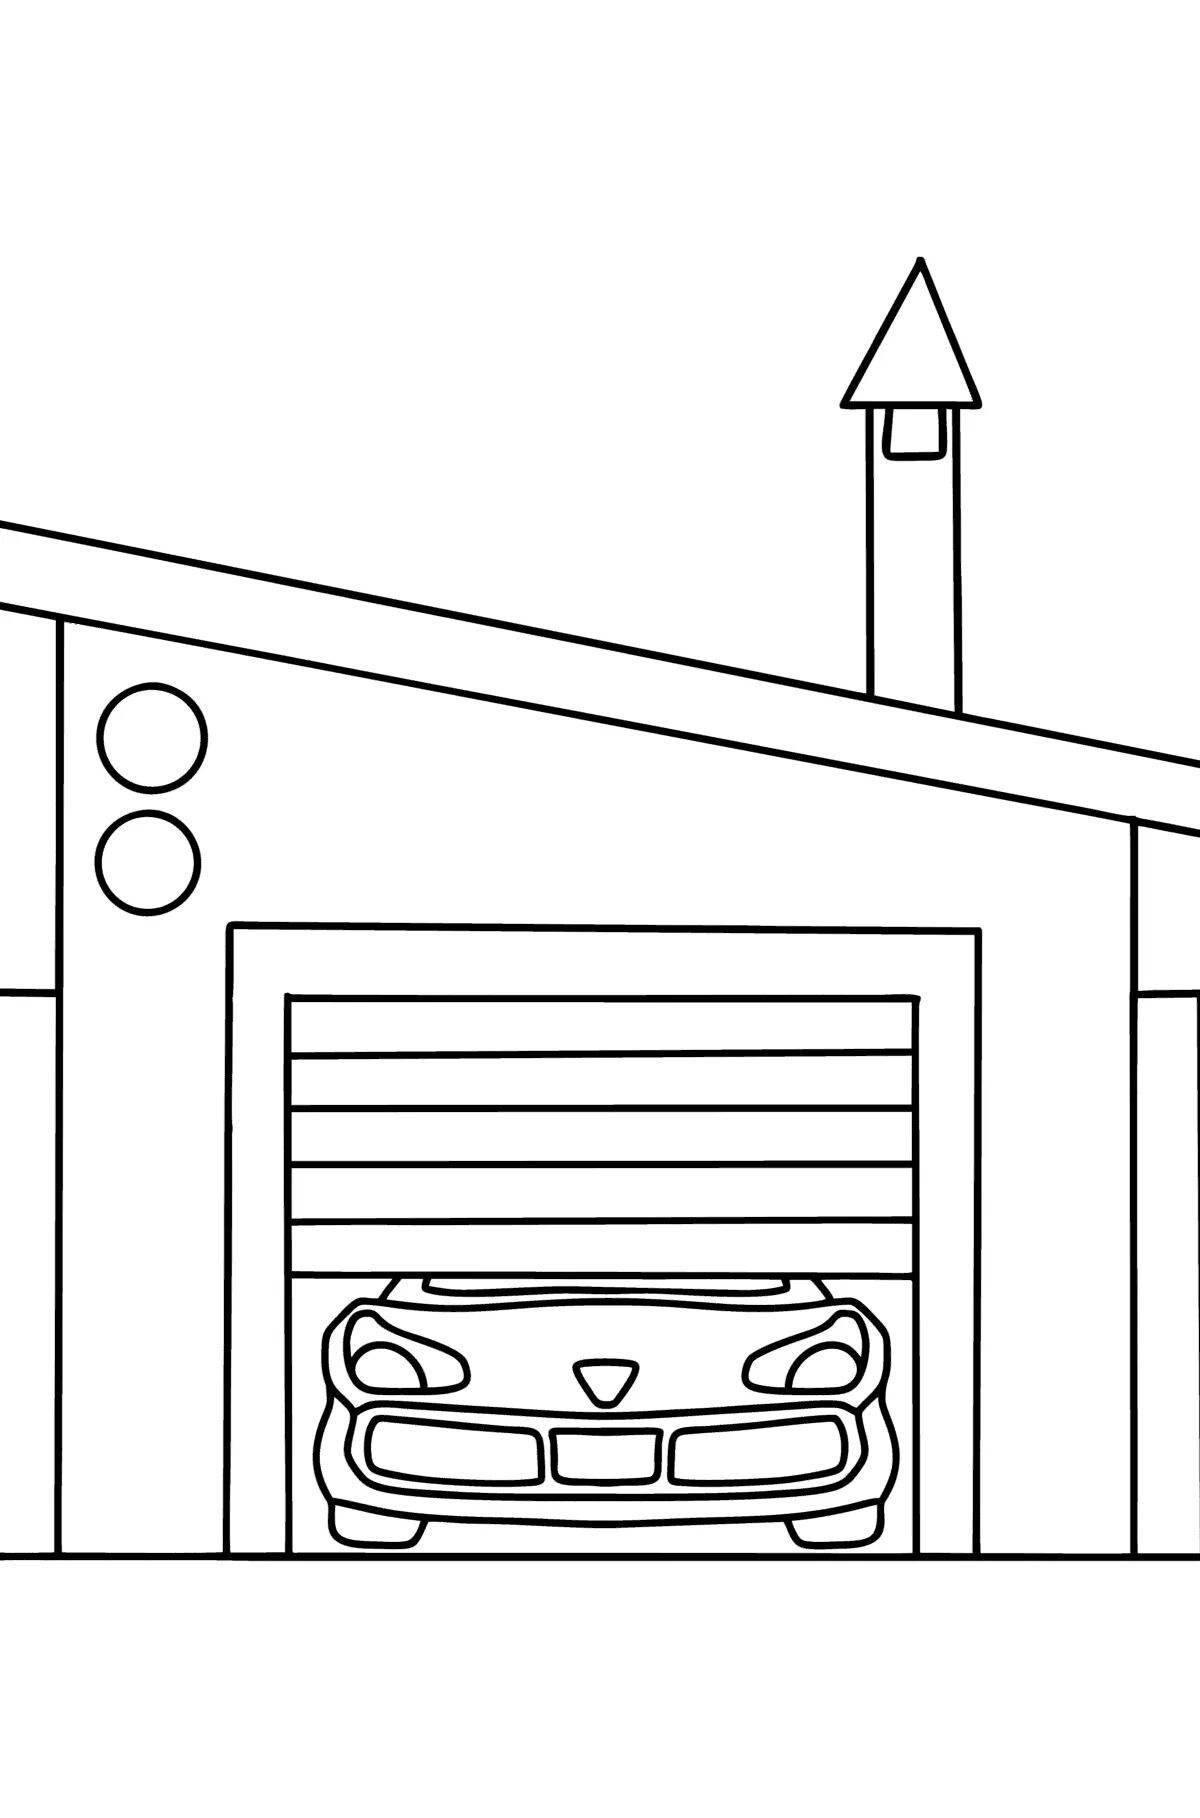 Garage coloring page